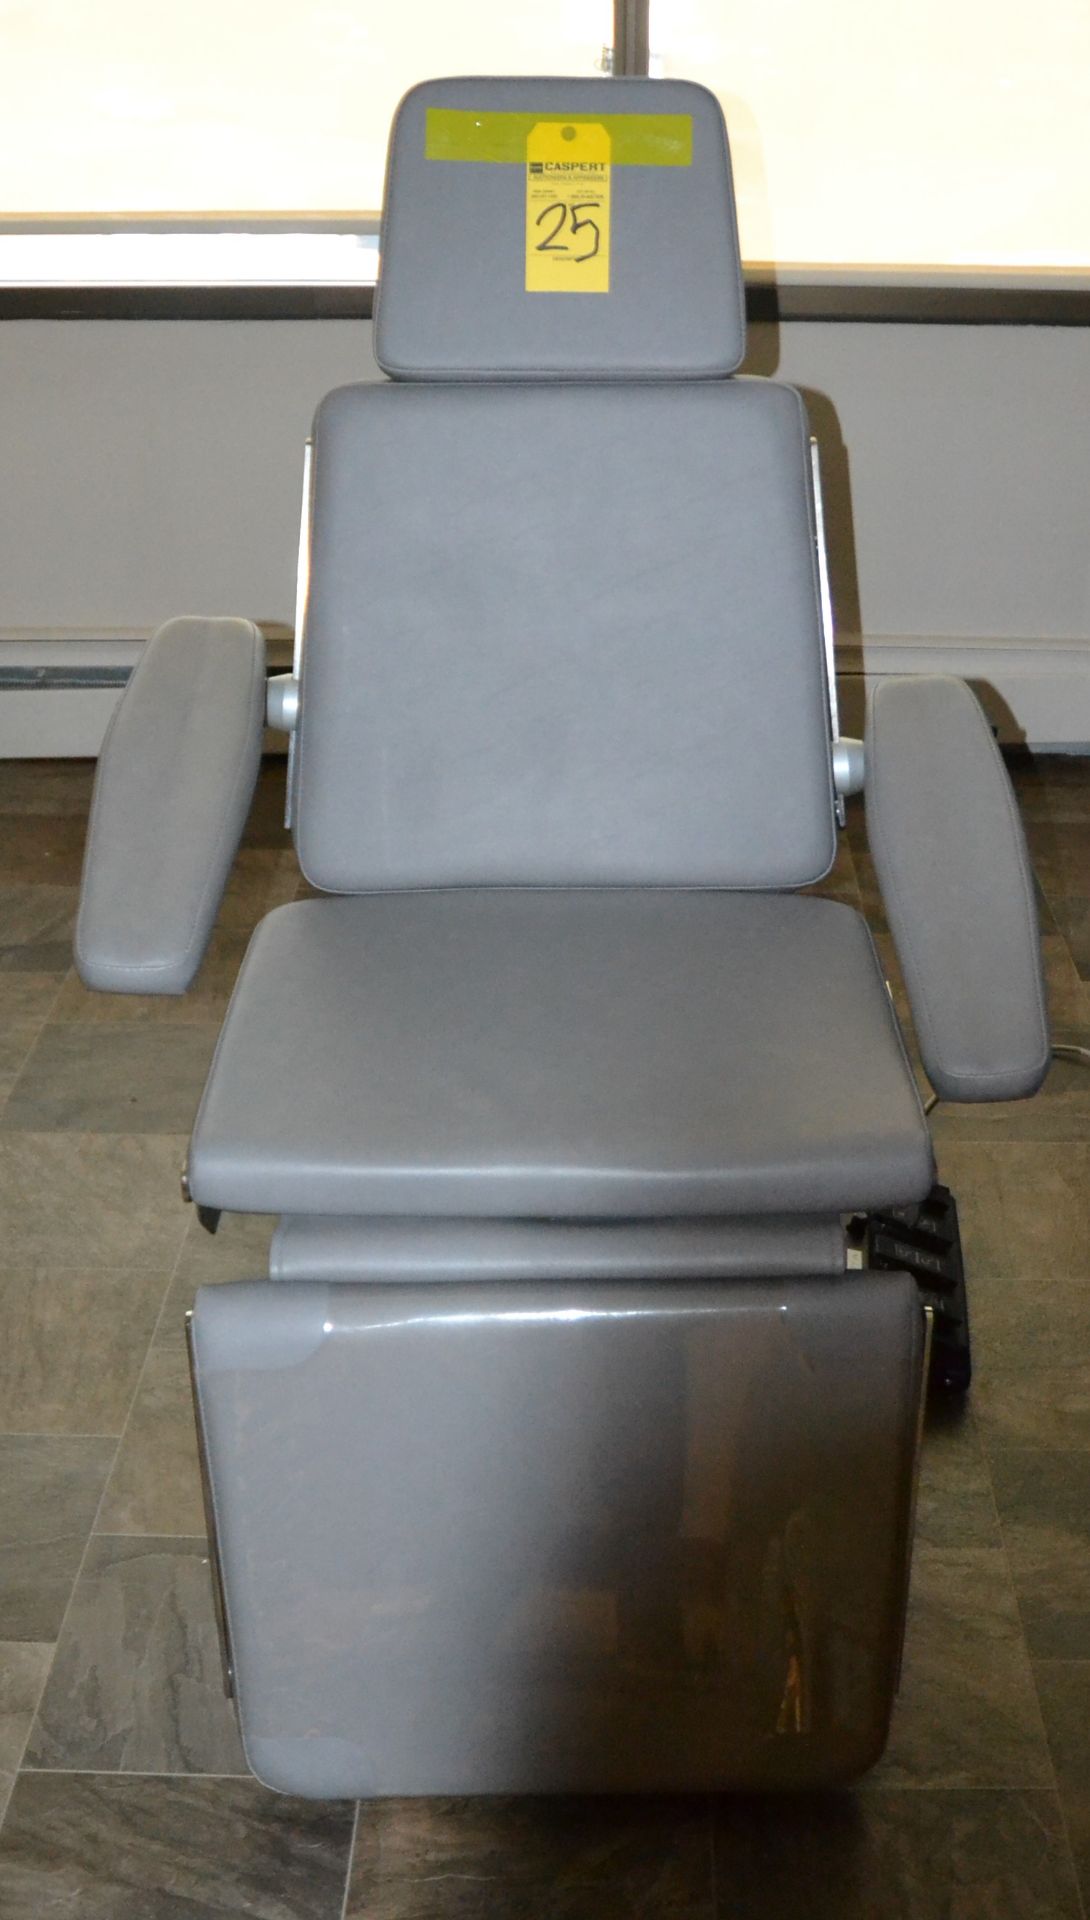 Dexta Examination Chair Model MK52X3 / #604-14, s/n 112114-9